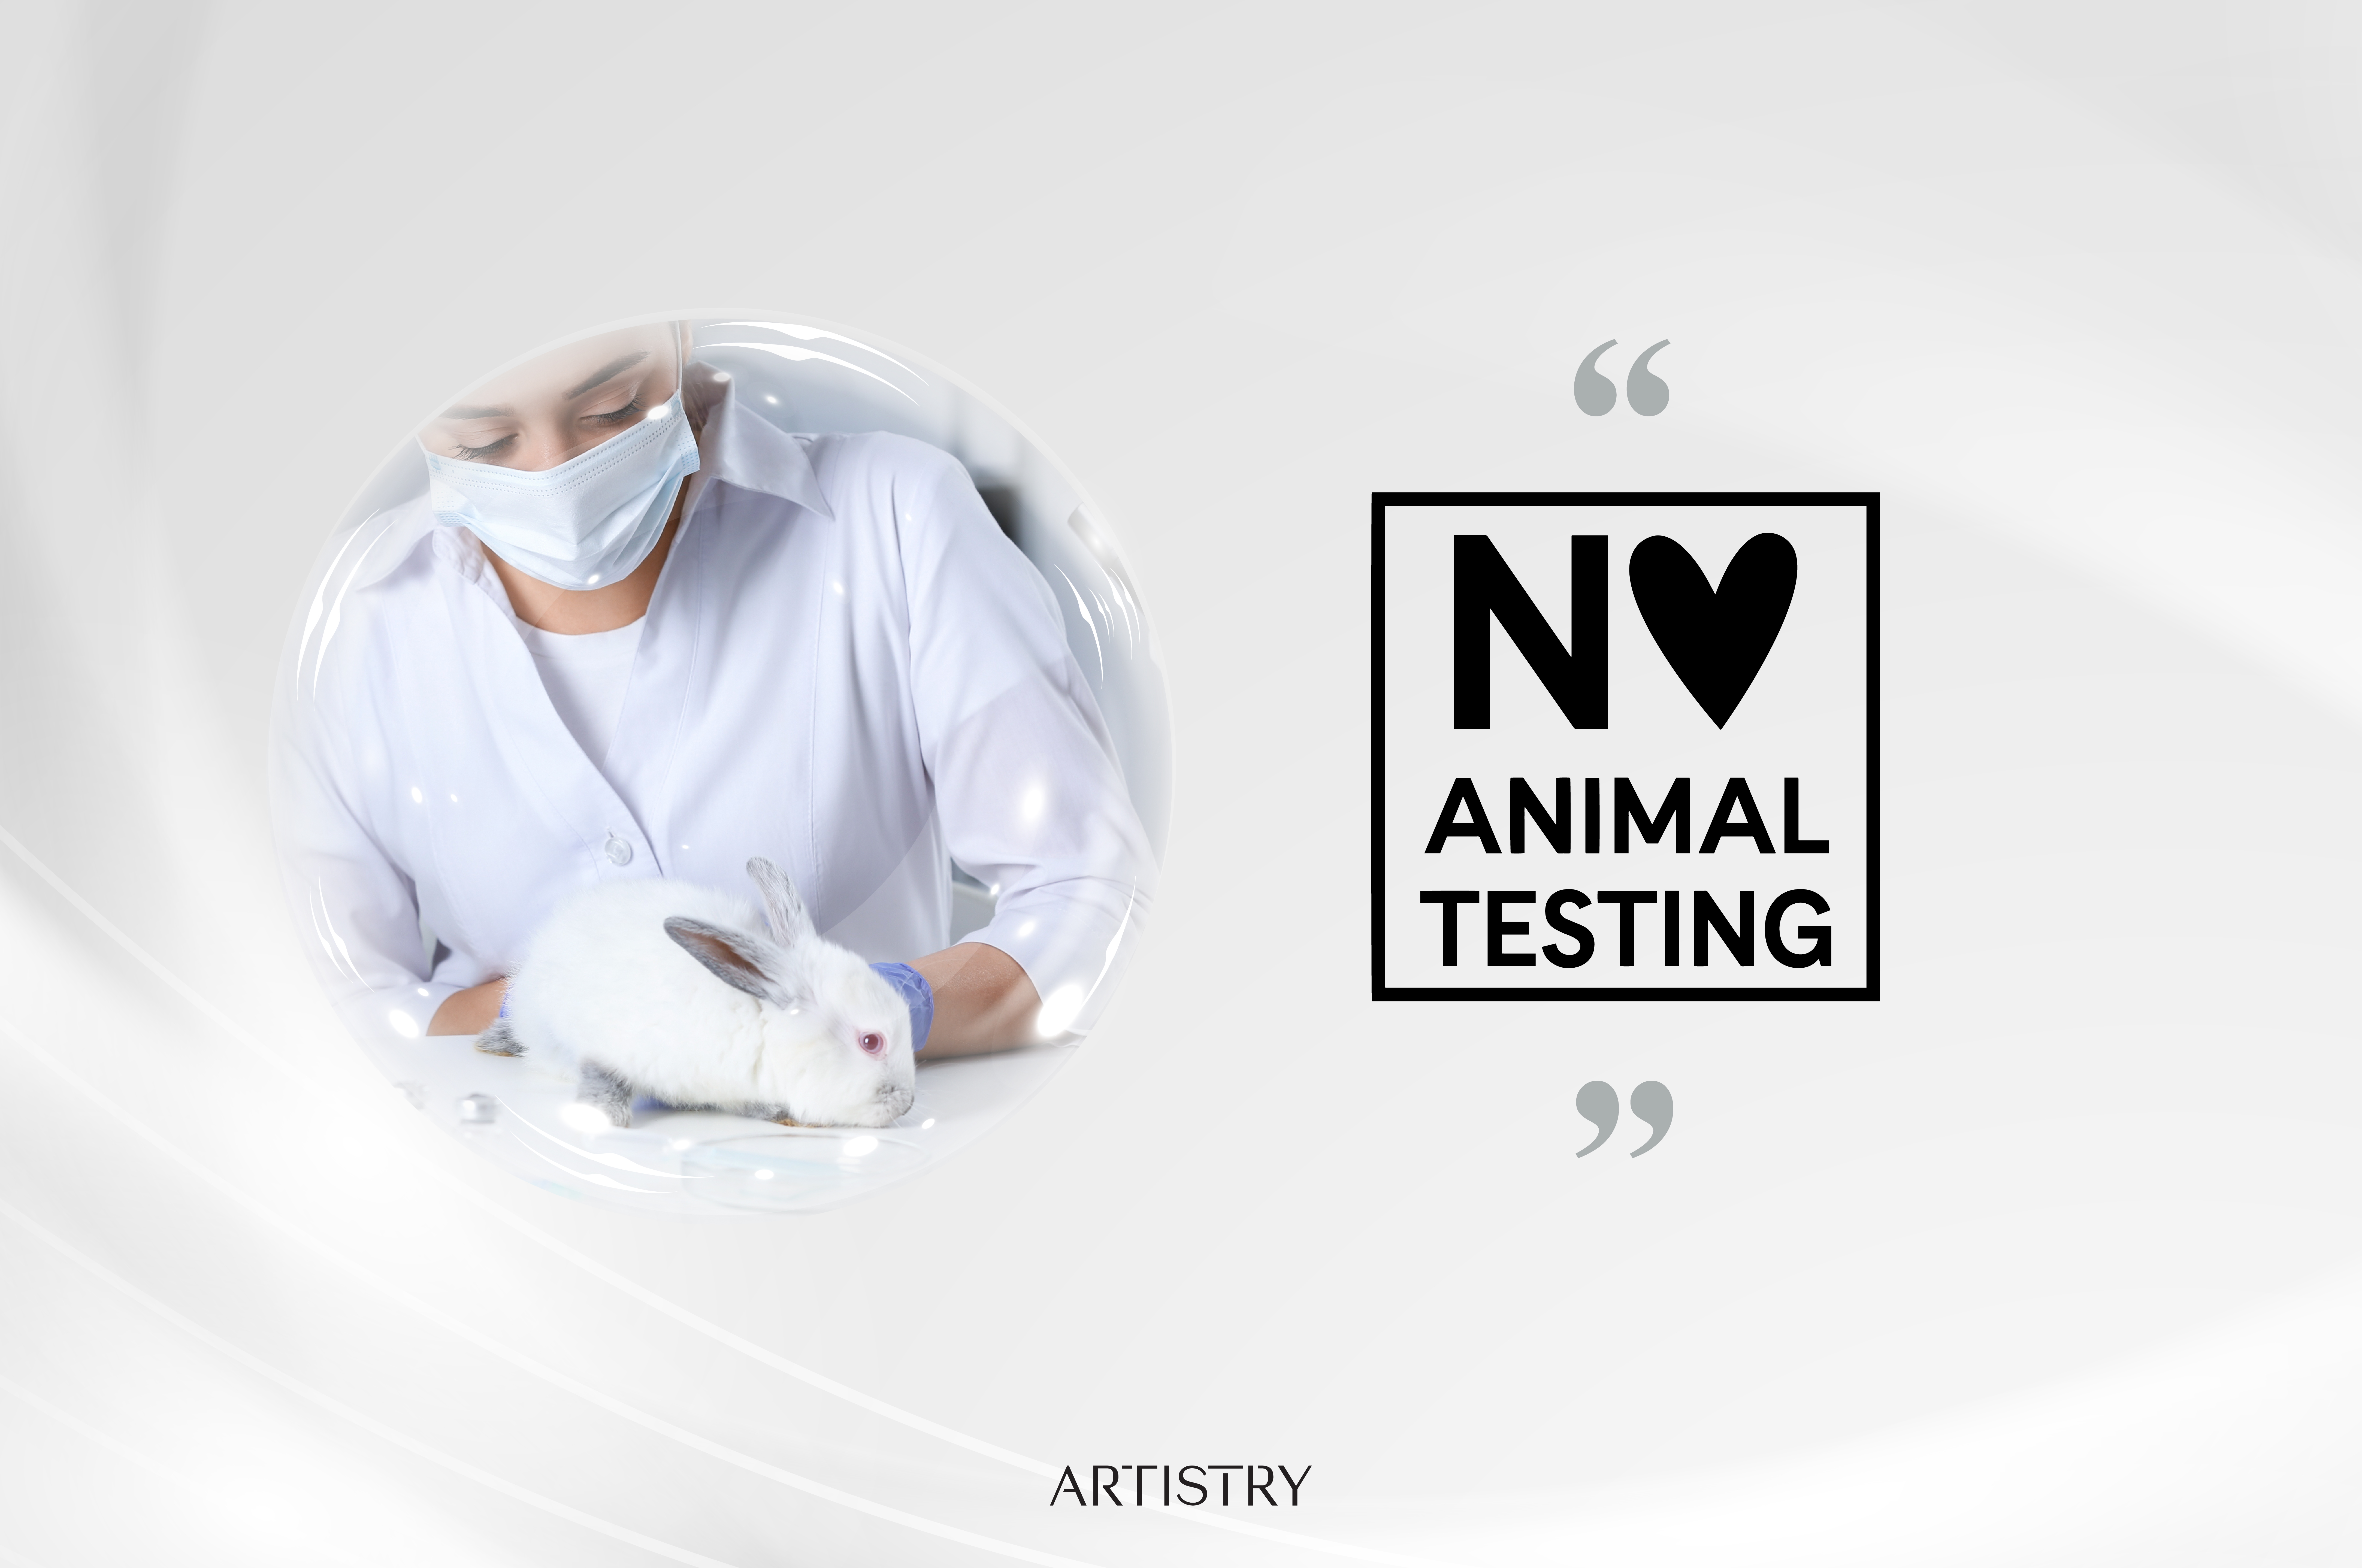 No Animal Testing